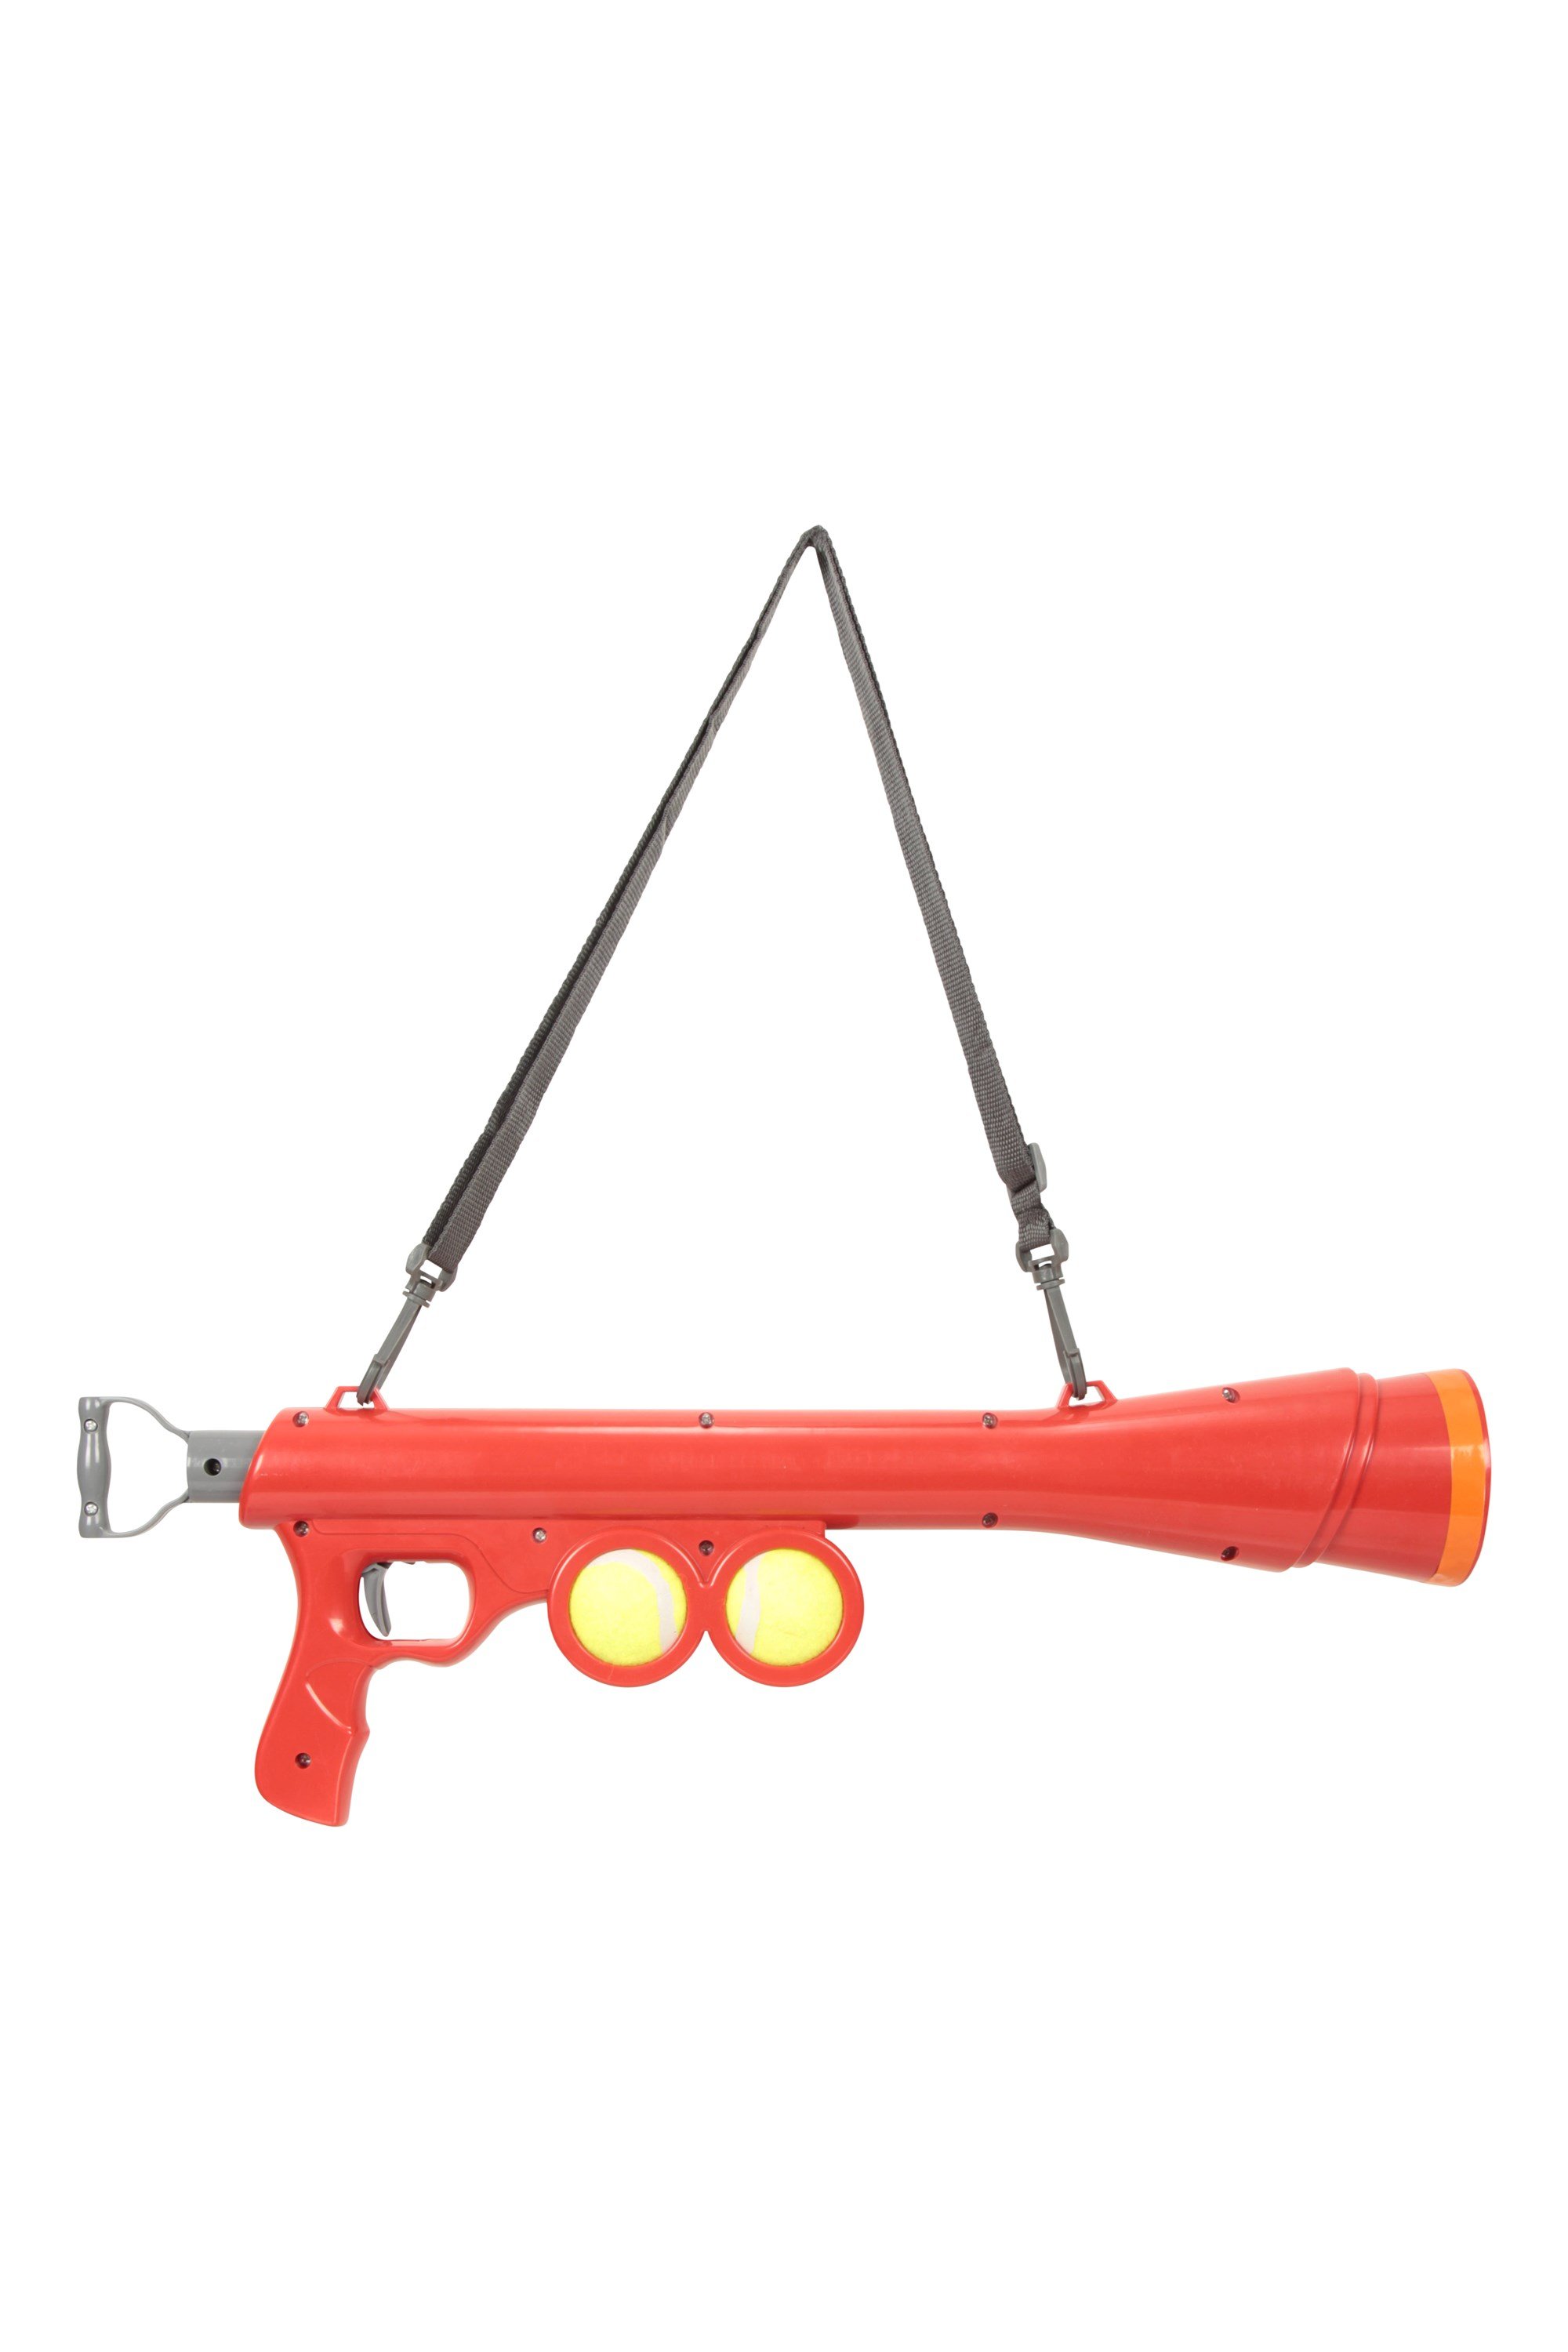 Ball Launcher - Red